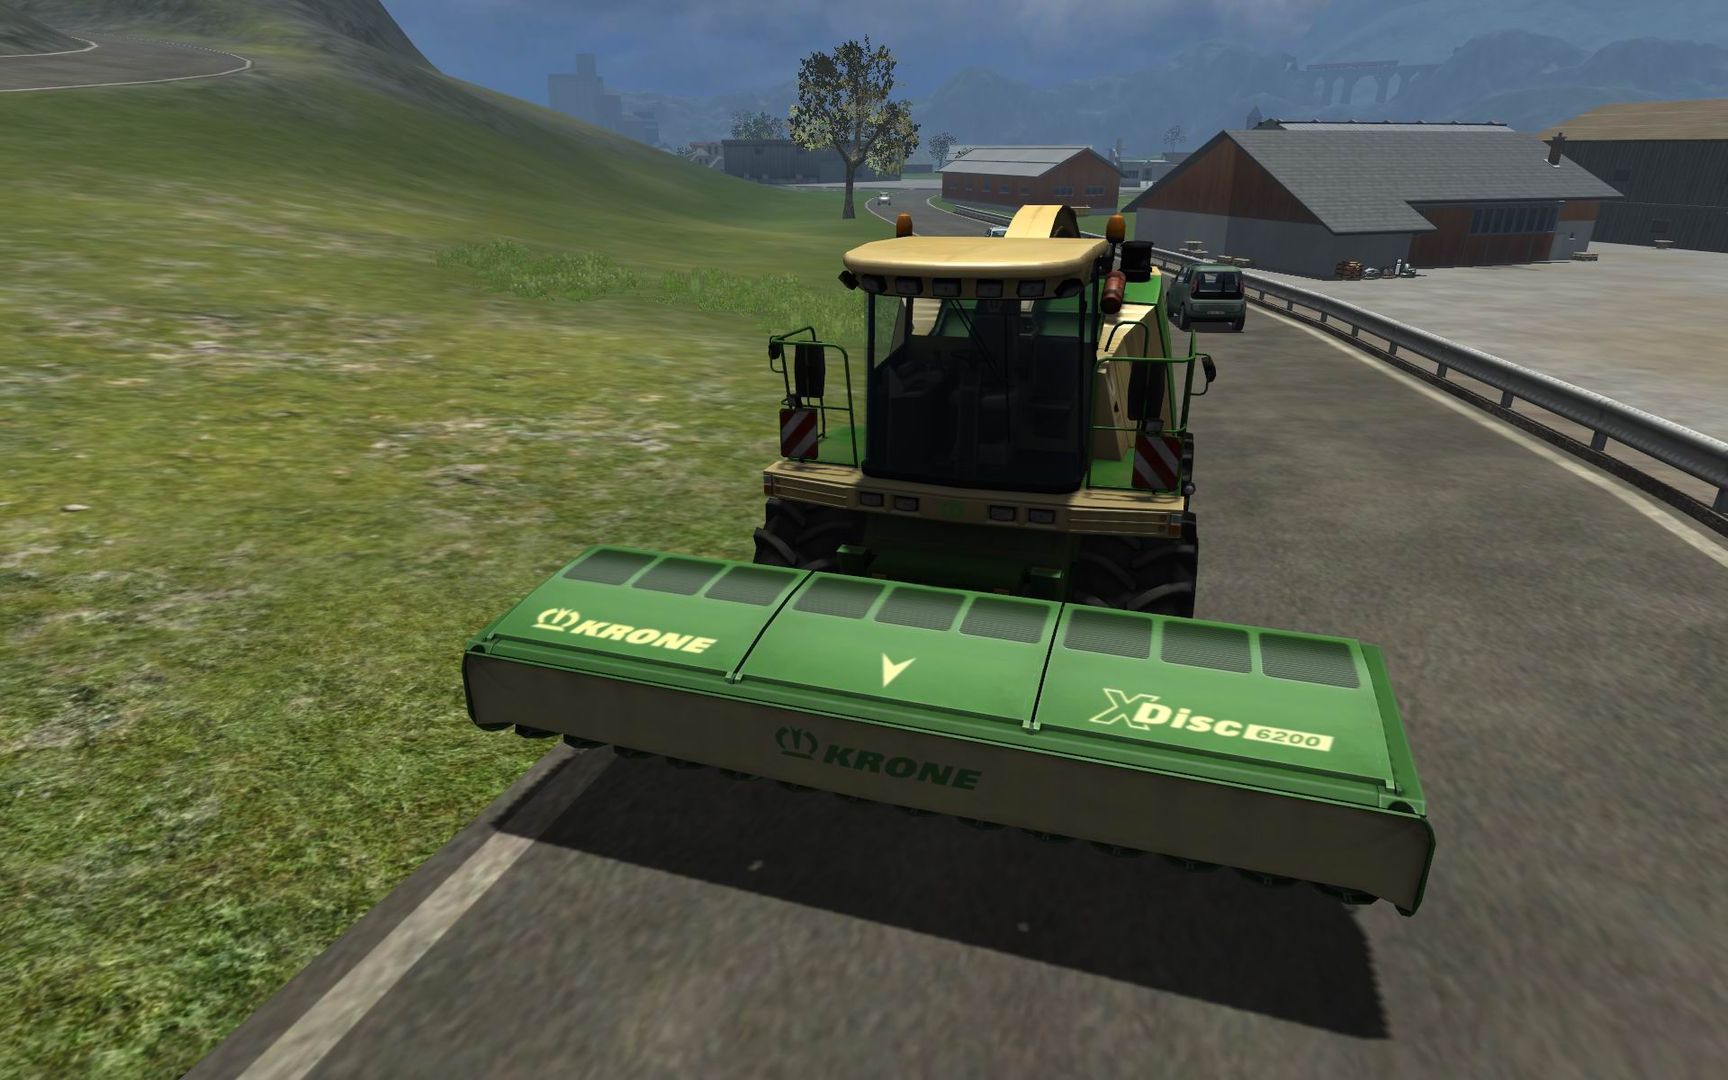 Farming Simulator 2011 - Equipment Pack 1 DLC Steam CD Key